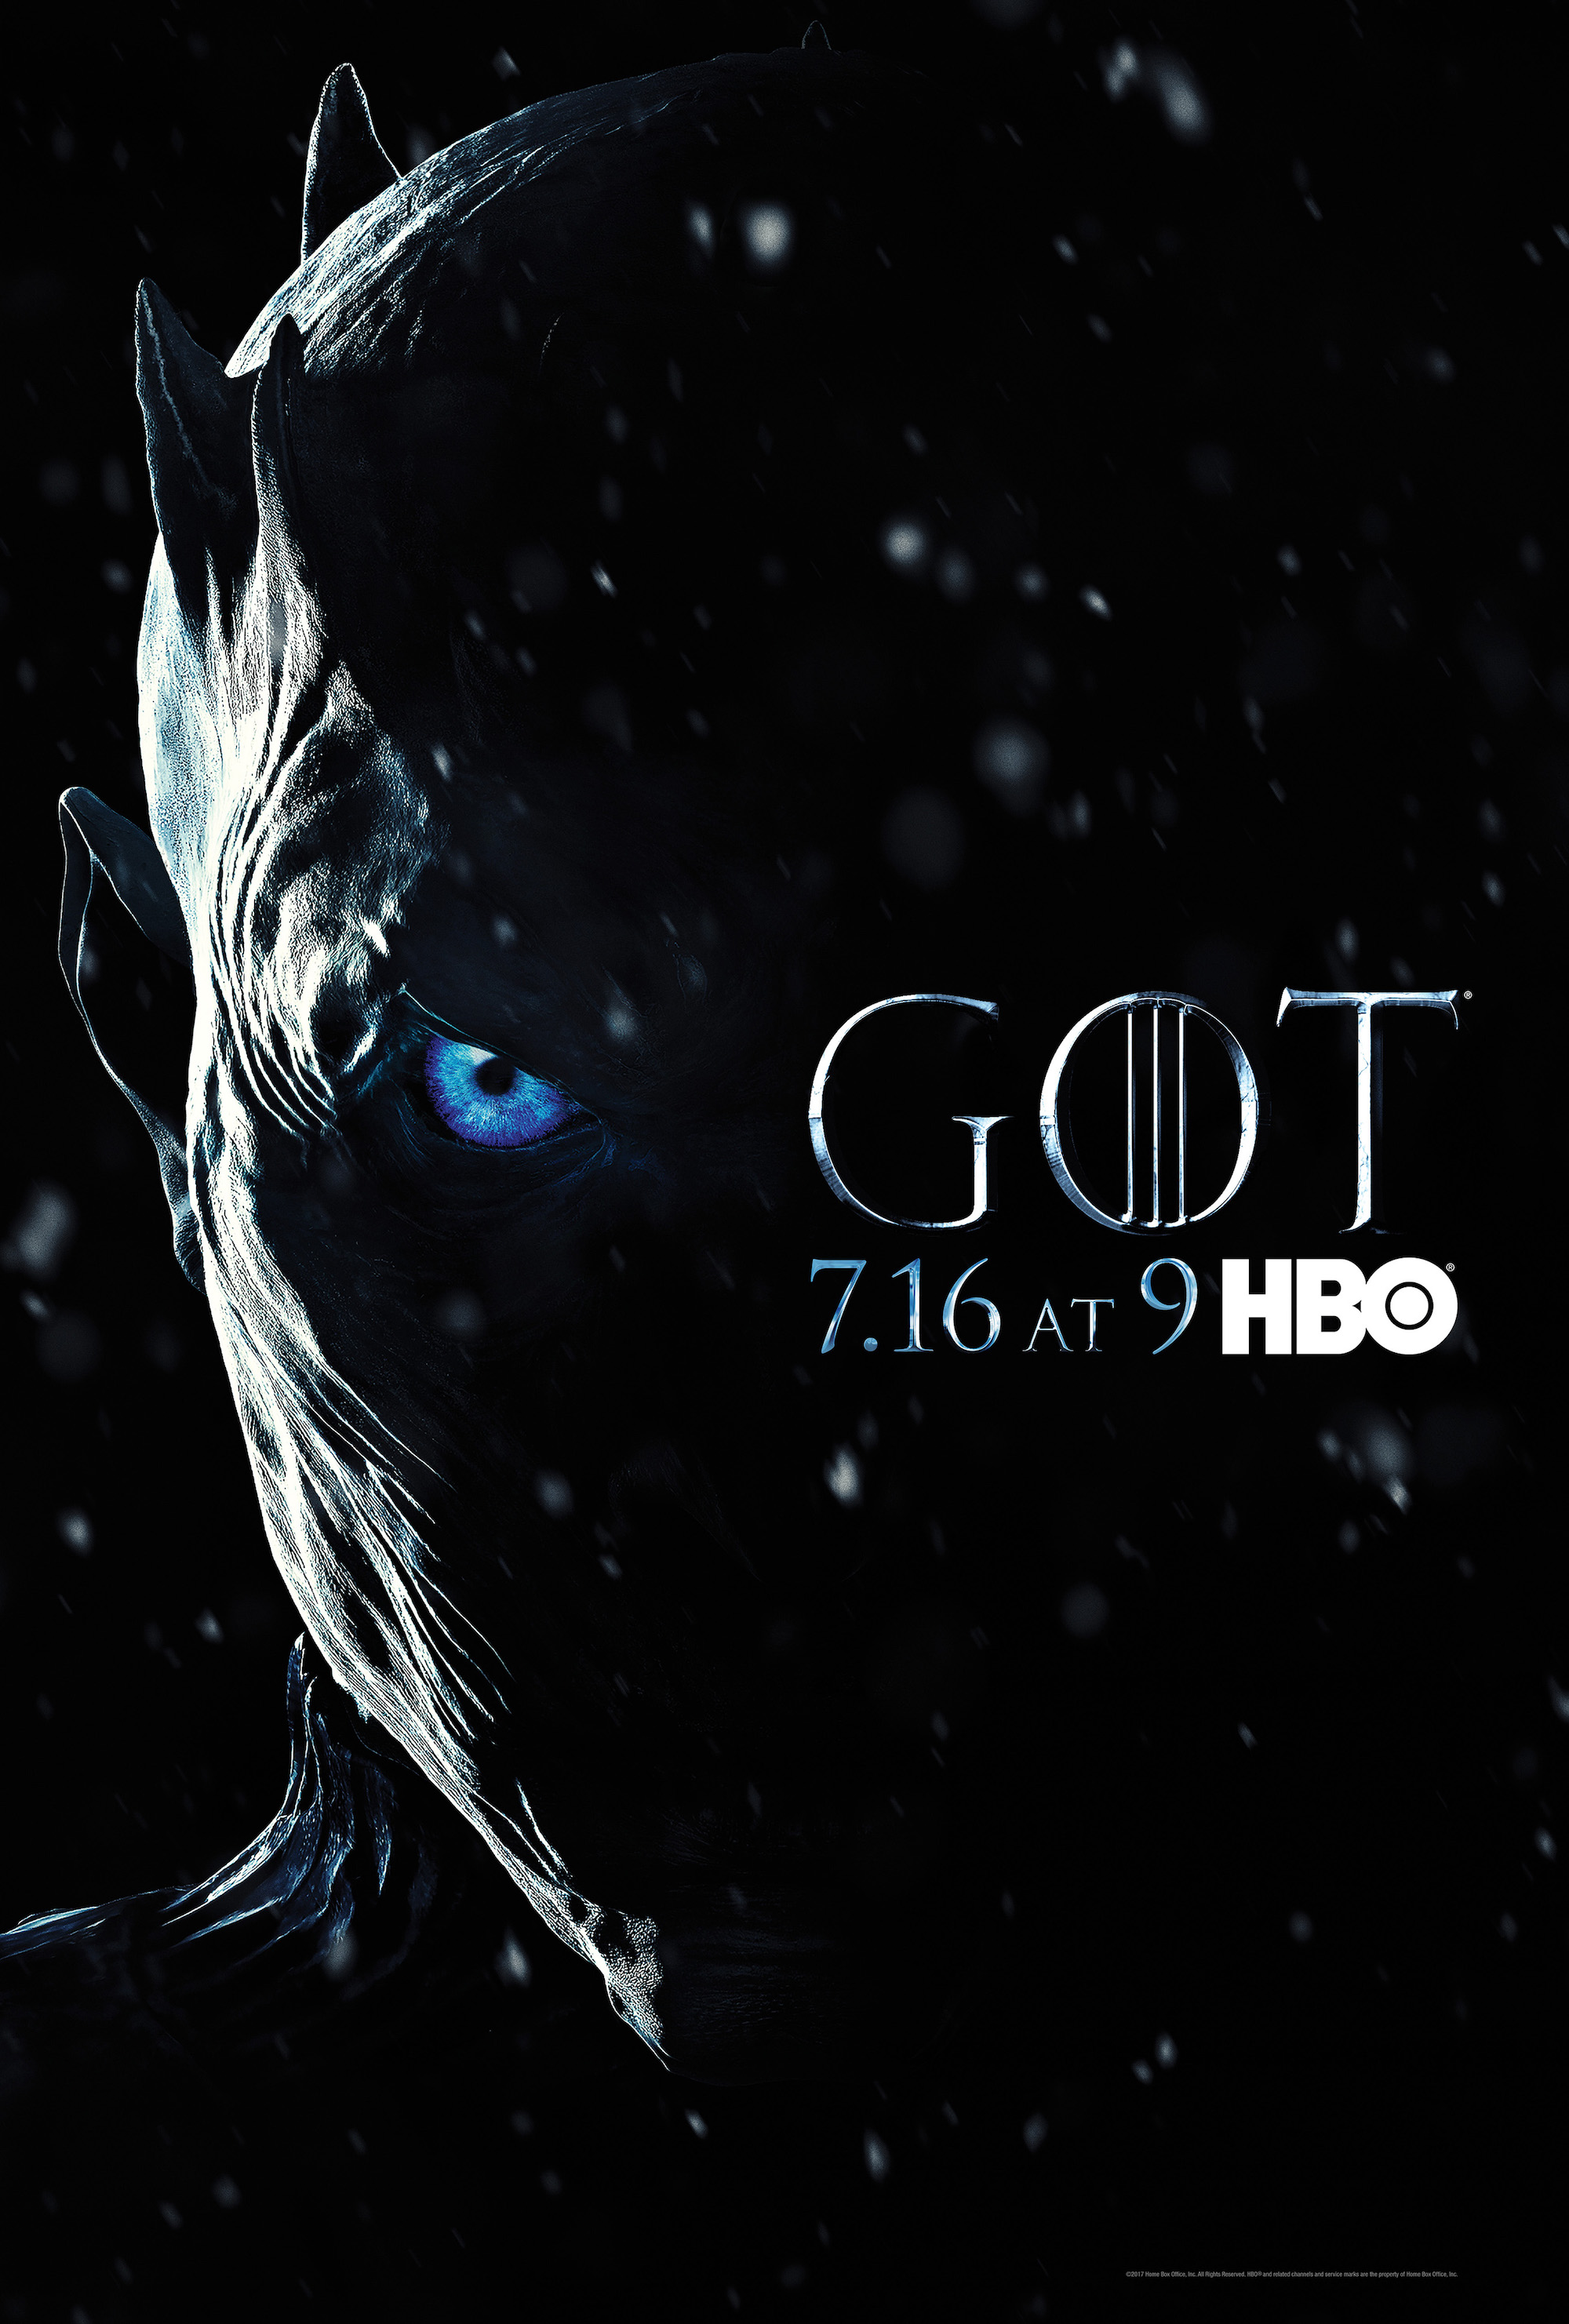 Night King Game of Thrones: Season 7 TV Show Poster